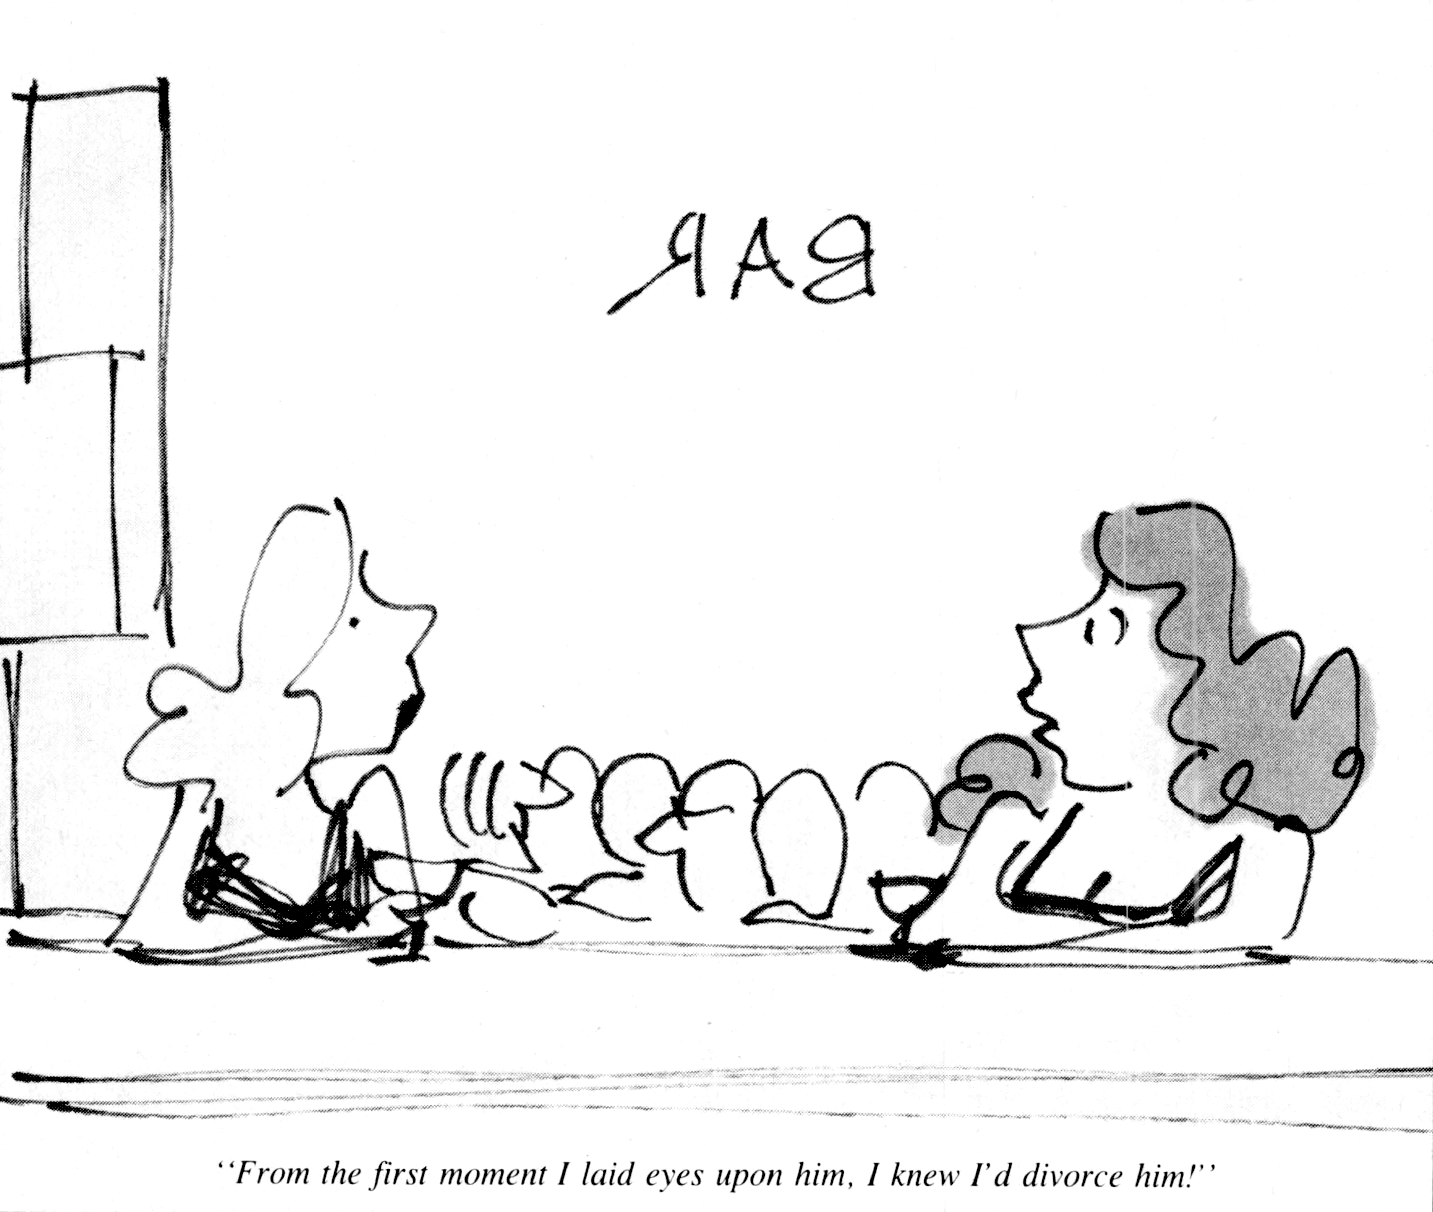 January 1985 (Divorce in Bar) San Diego Magazine Historical Cartoon